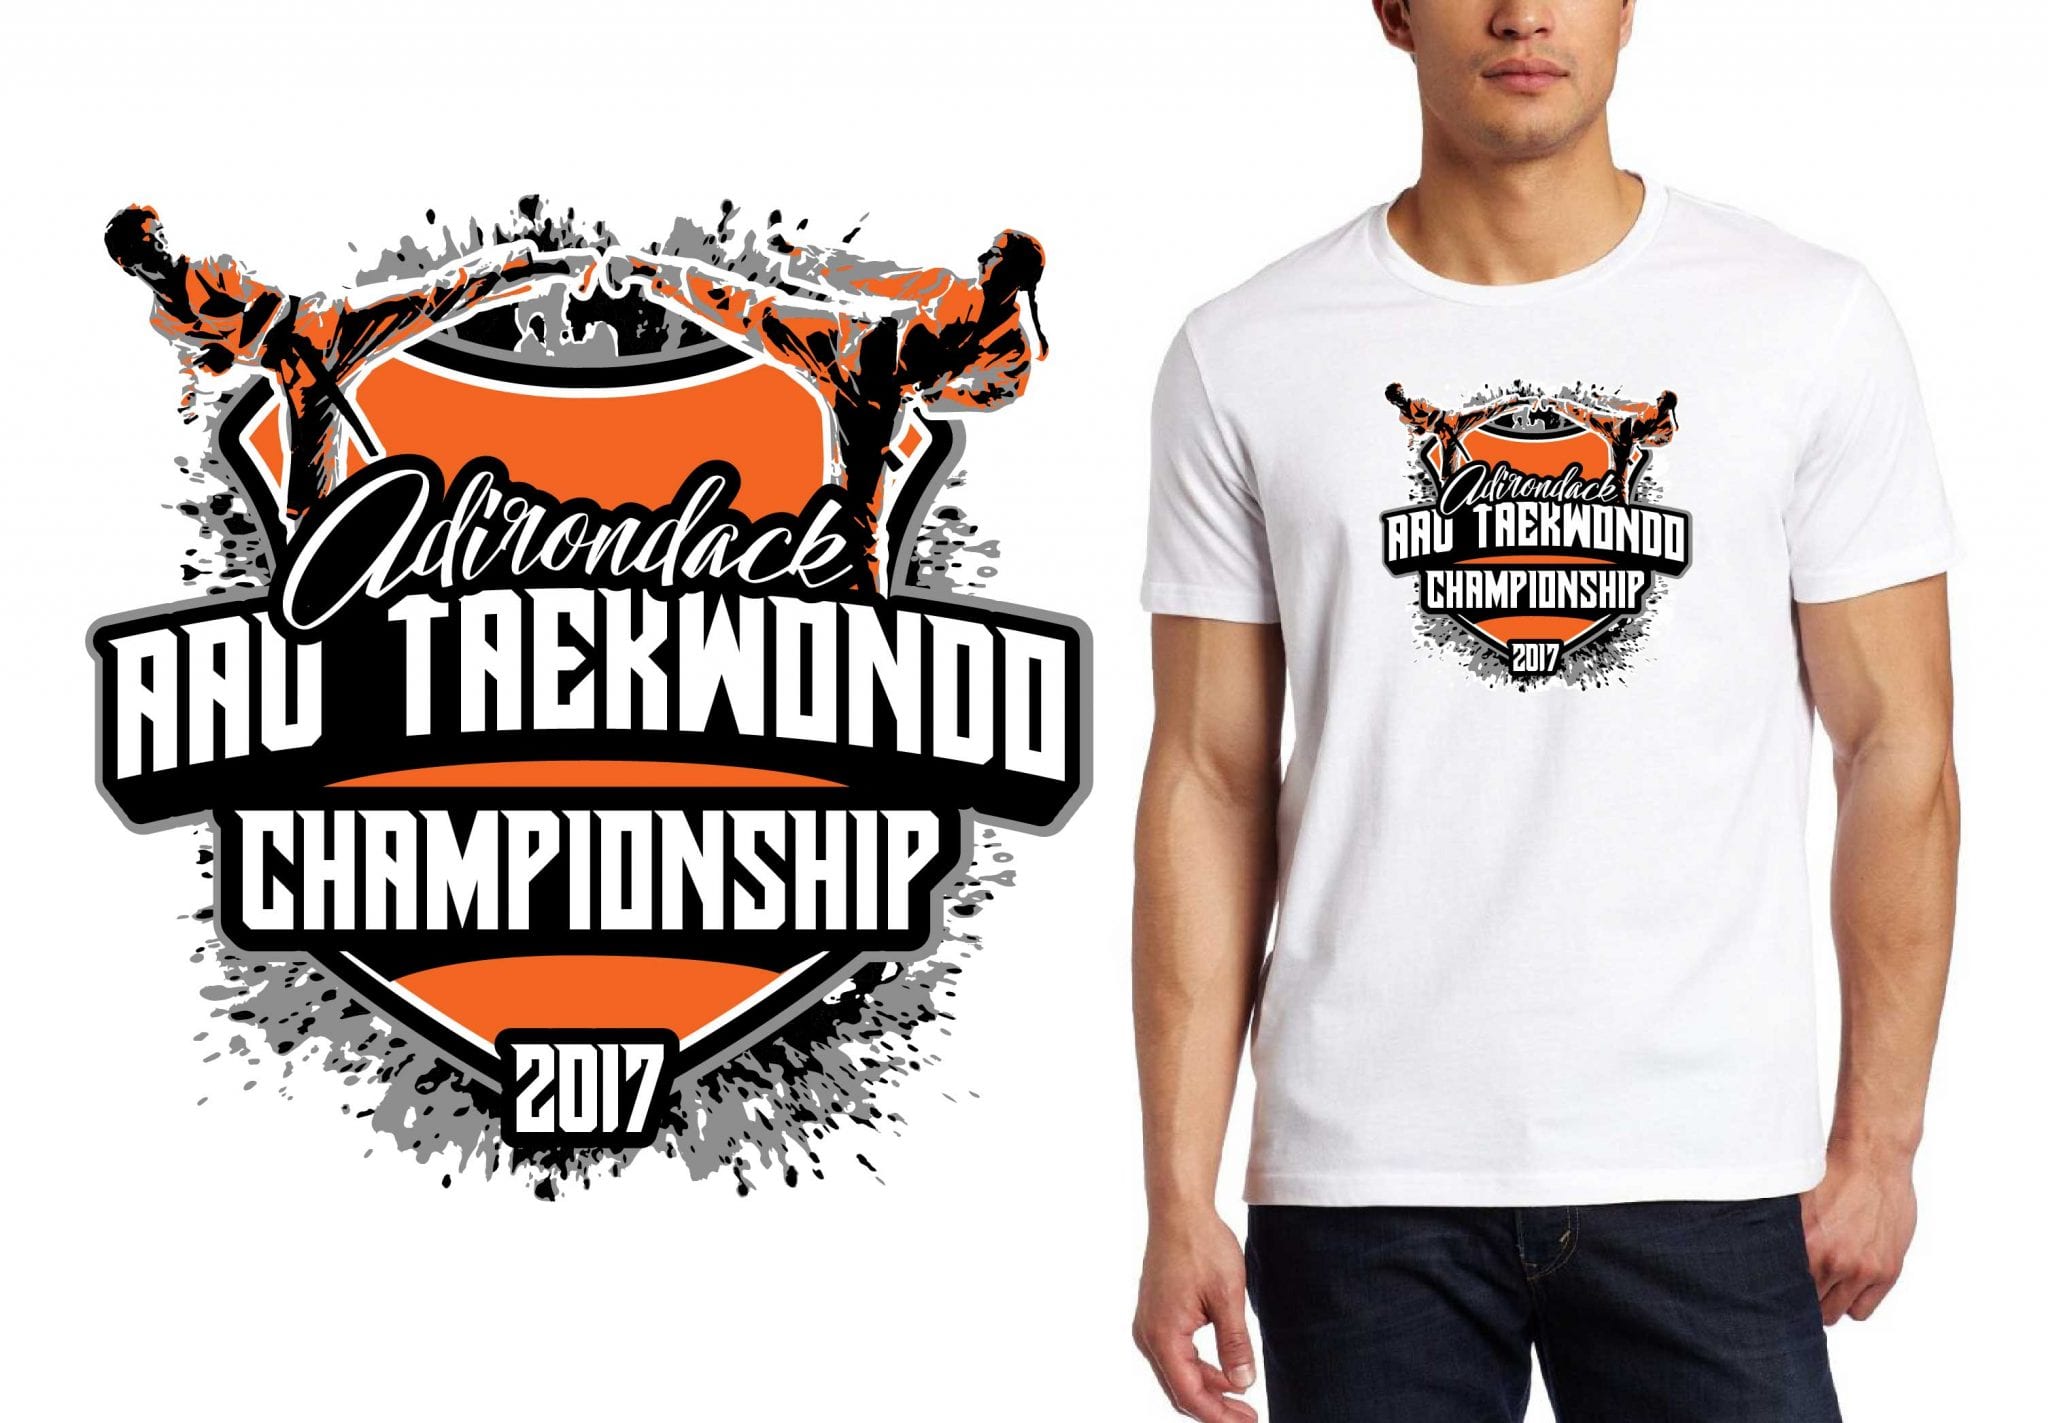 TAEKWONDO LOGO for Adirondack-AAU-Taekwondo-Championship T-SHIRT UrArtStudio